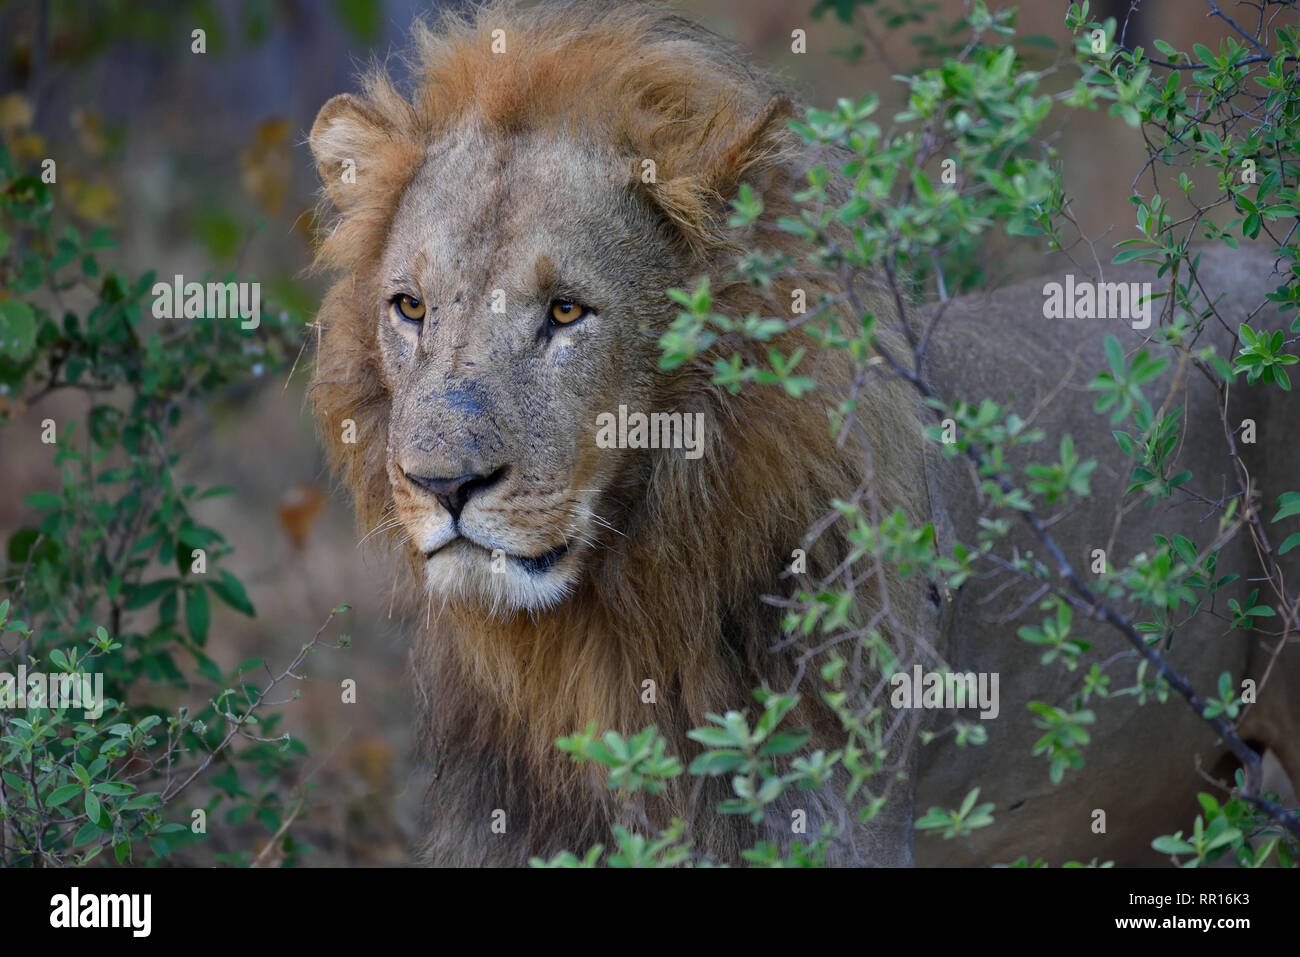 Zoología, mamíferos (Mammalia), León (Panthera leo), animal macho, zona Khwai, distrito noroccidental, Additional-Rights Okavang-Clearance-Info-Not-Available Foto de stock